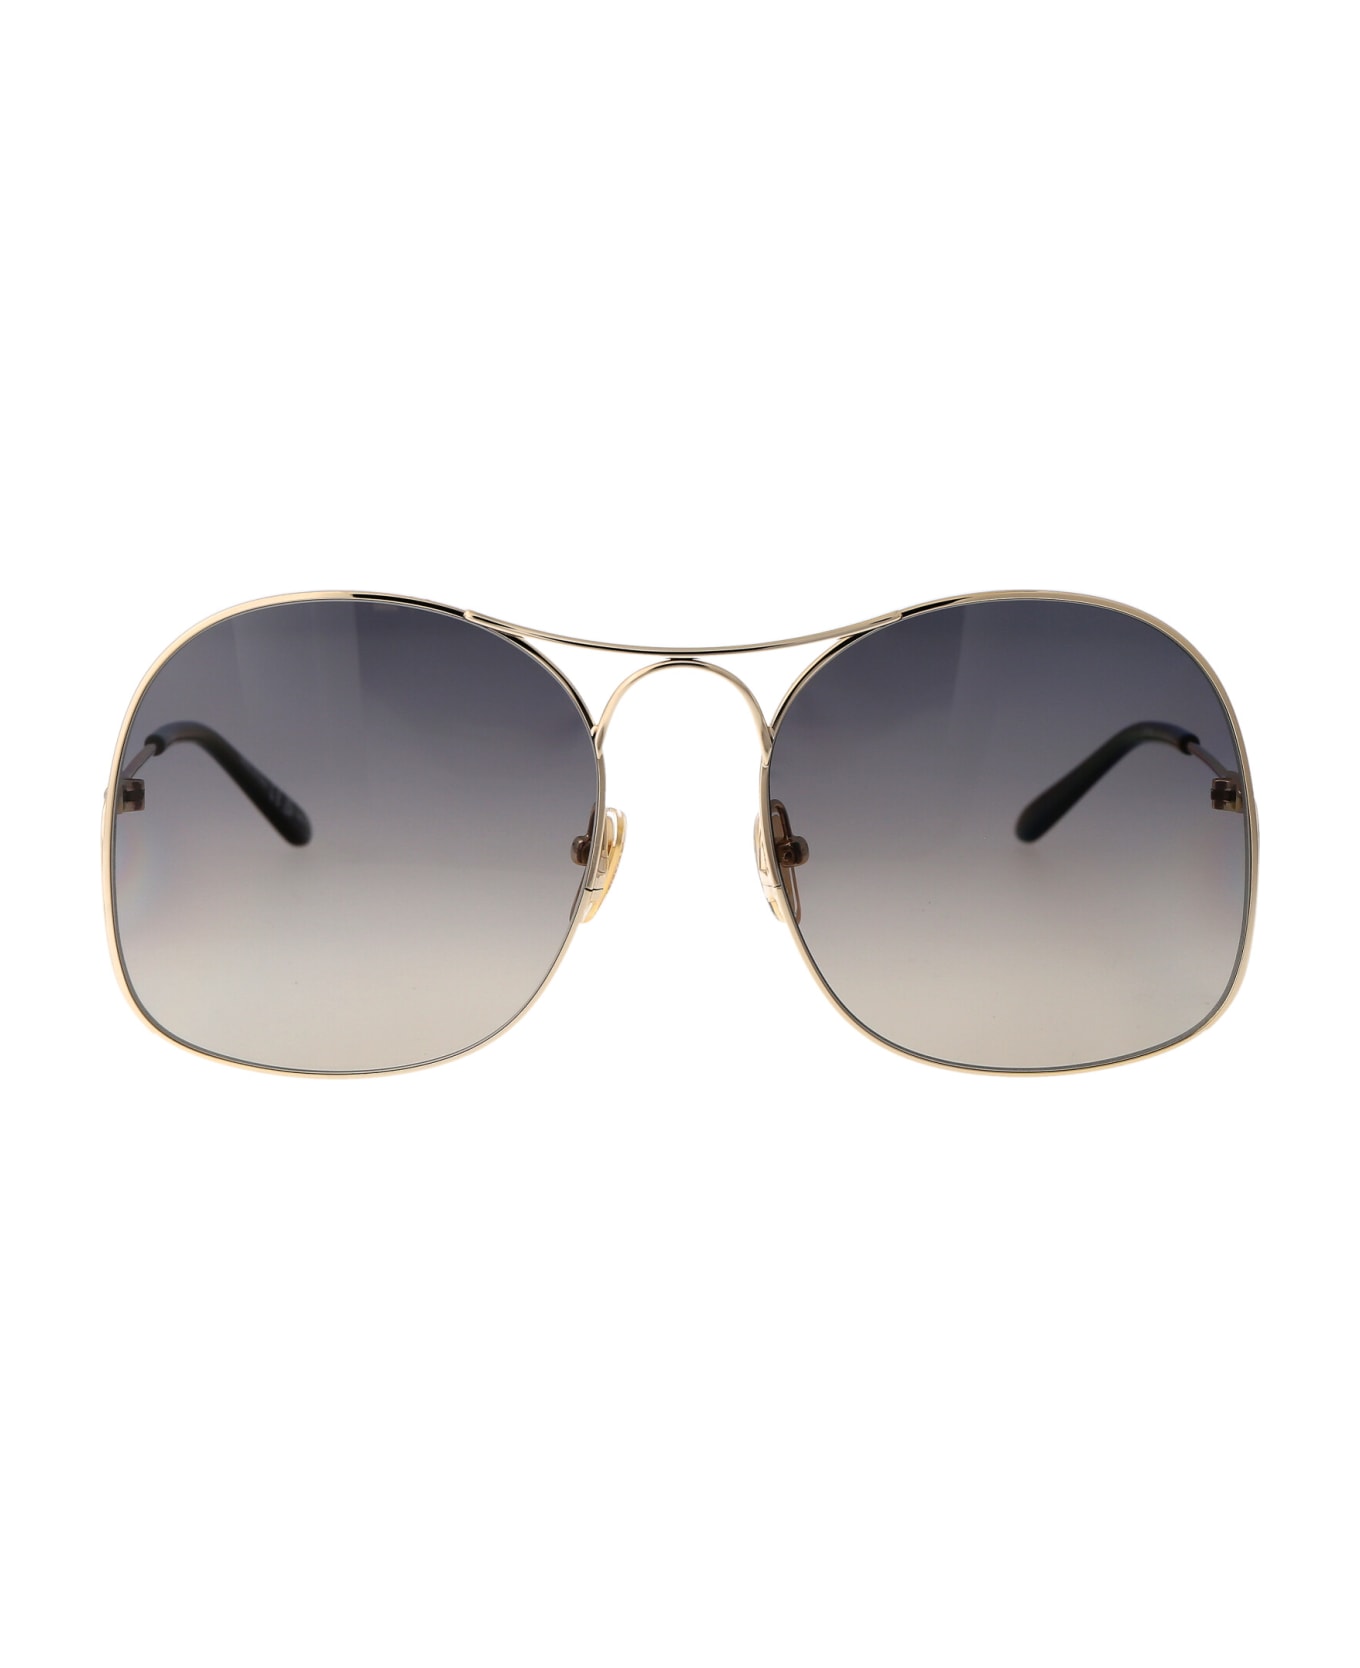 Chloé Eyewear Ch0164s Sunglasses - 001 GOLD GOLD GREY サングラス